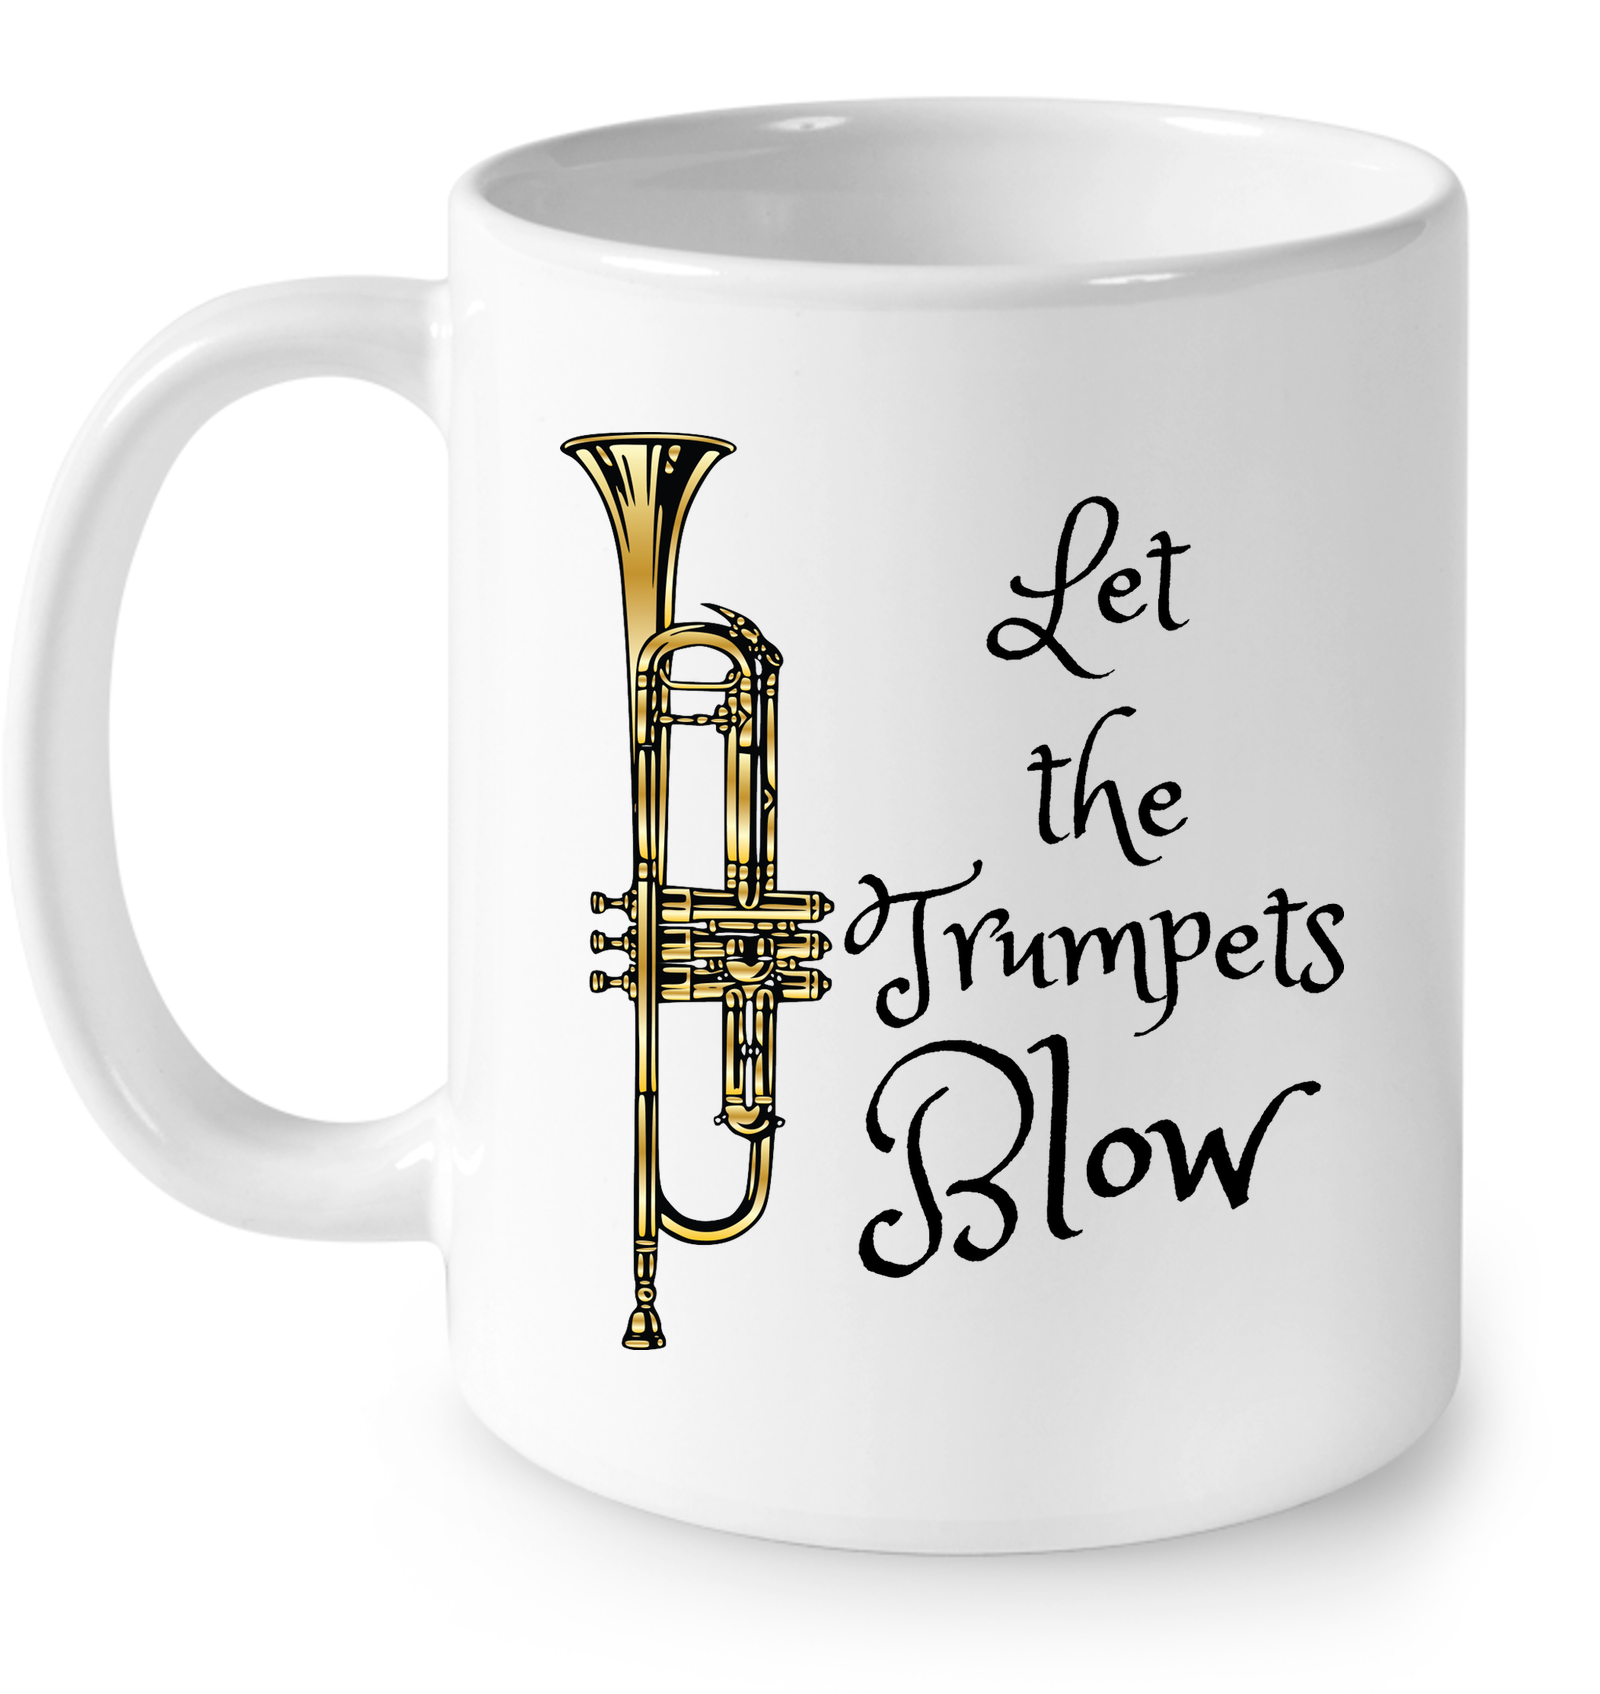 Let the Trumpets Blow - Ceramic Mug